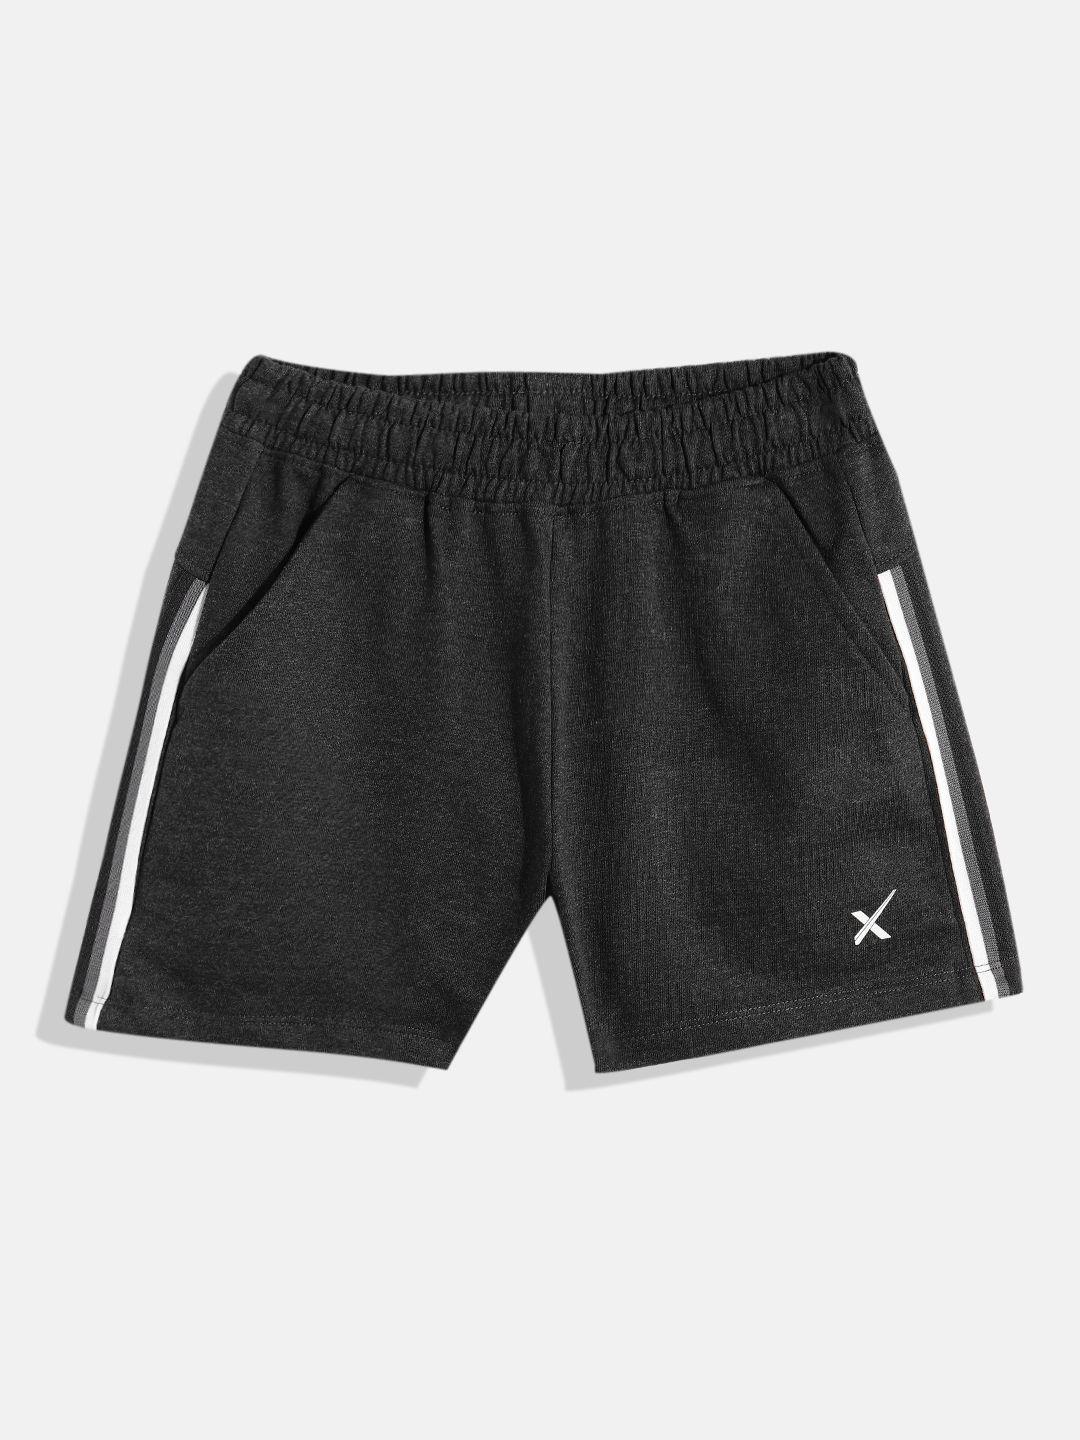 hrx by hrithik roshan boys charcoal grey solid sports shorts